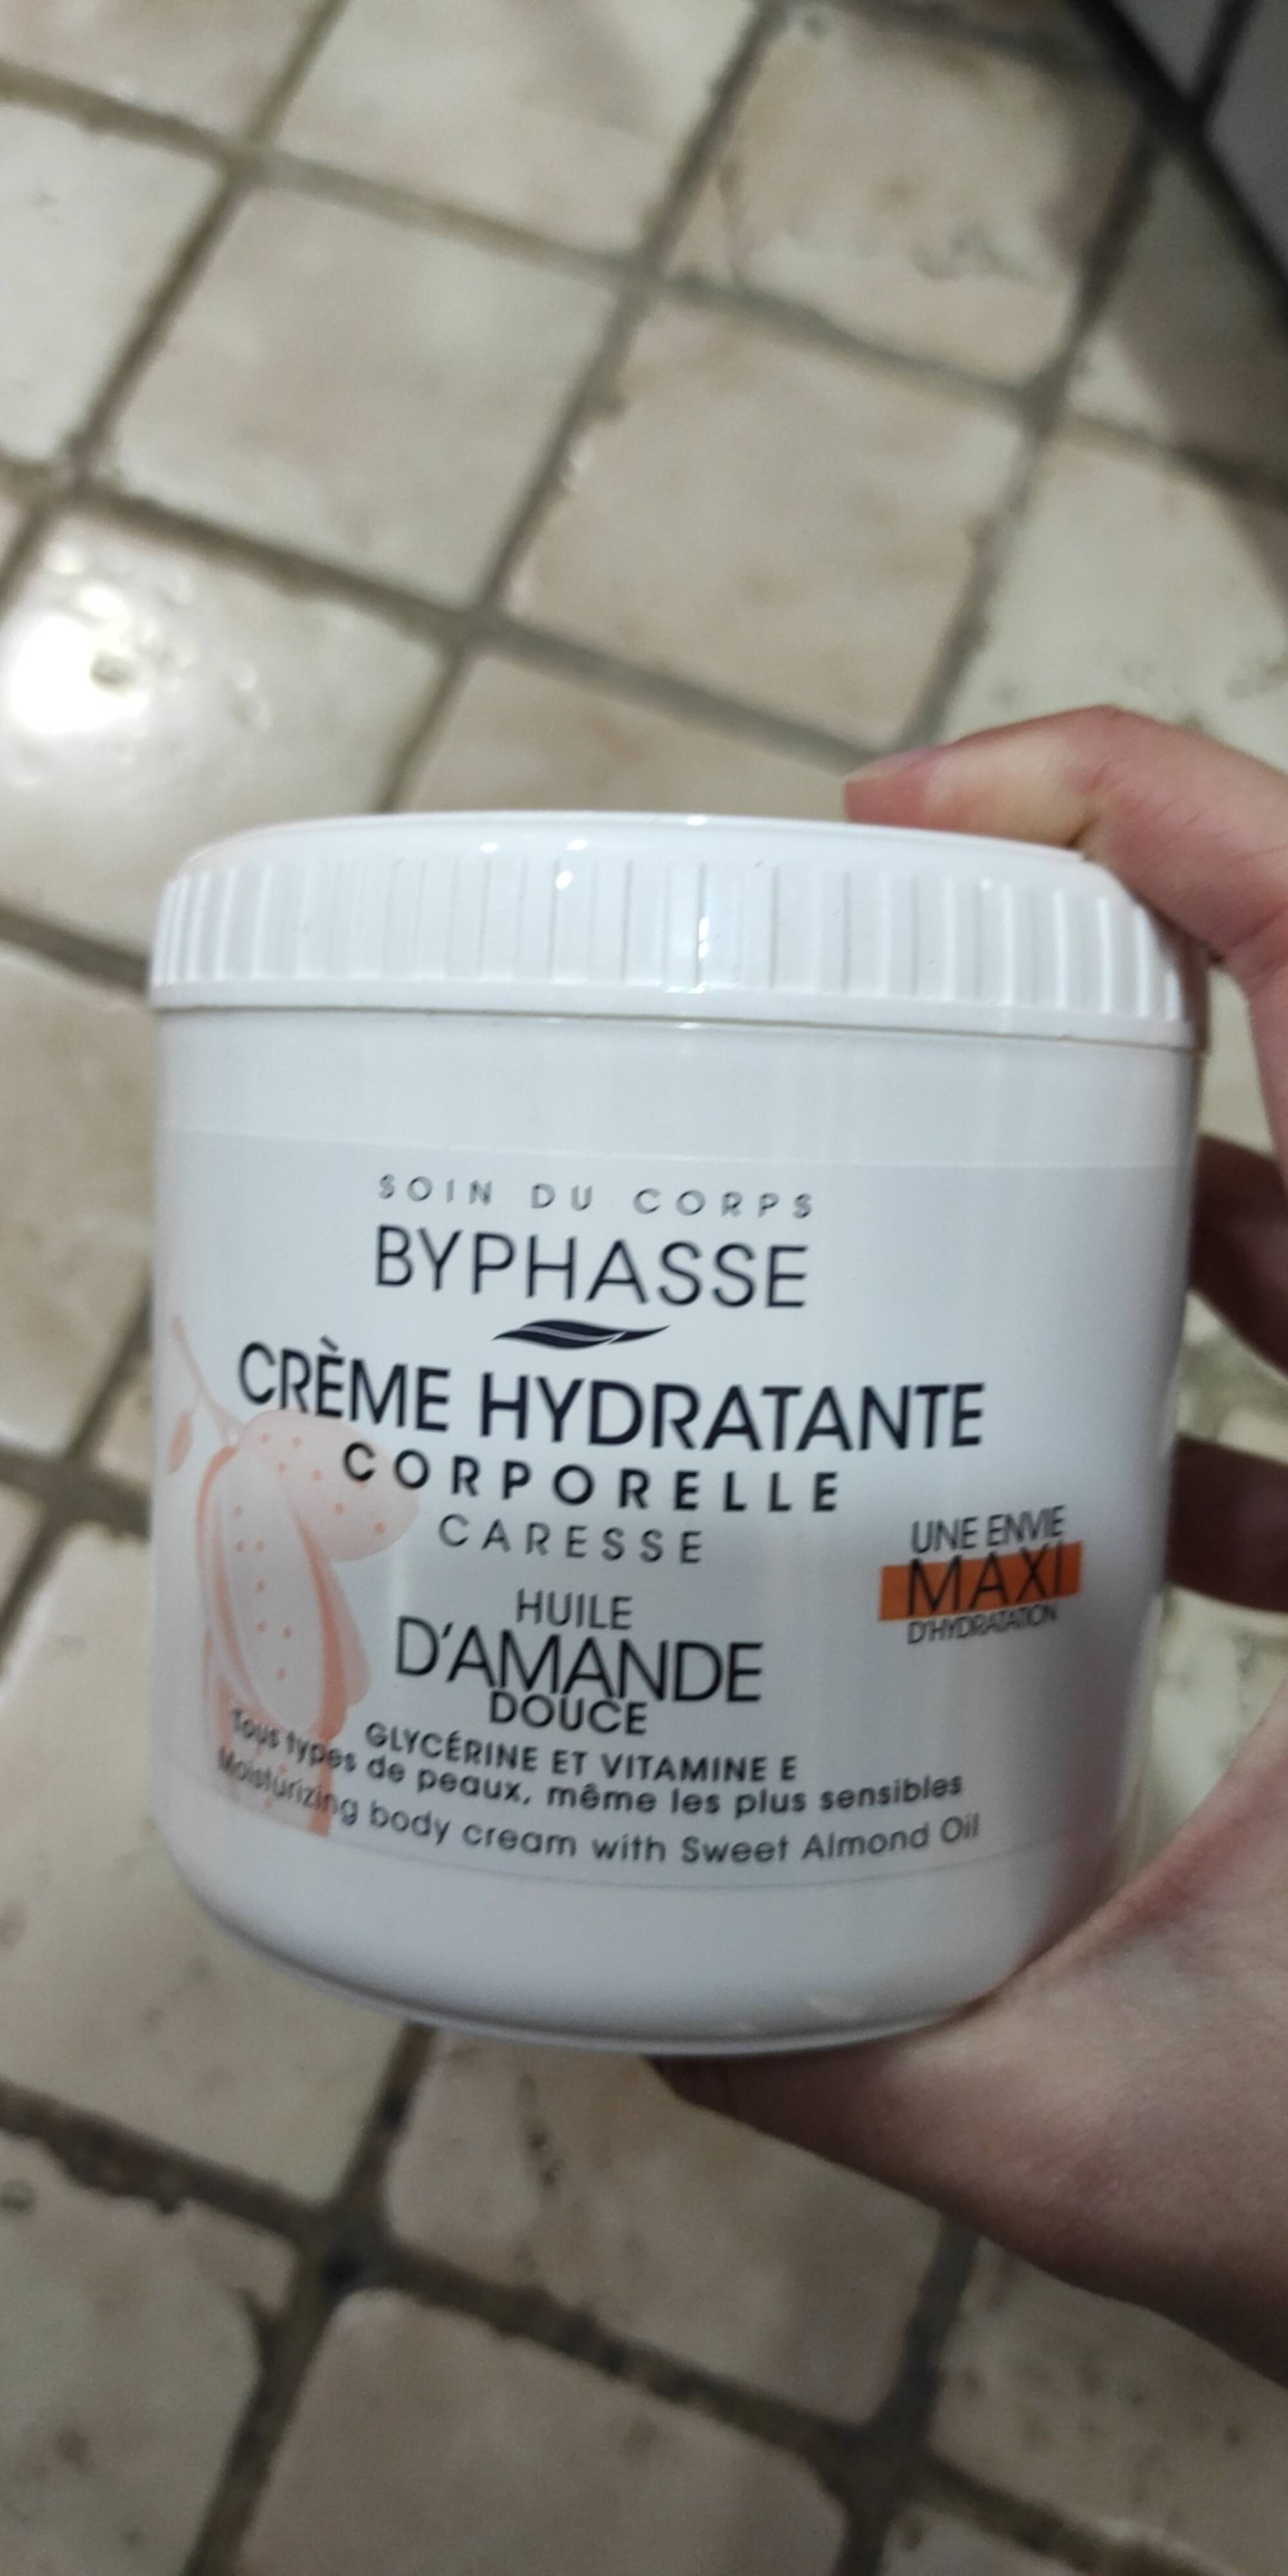 BYPHASSE - Crème hydratante corporelle caresse